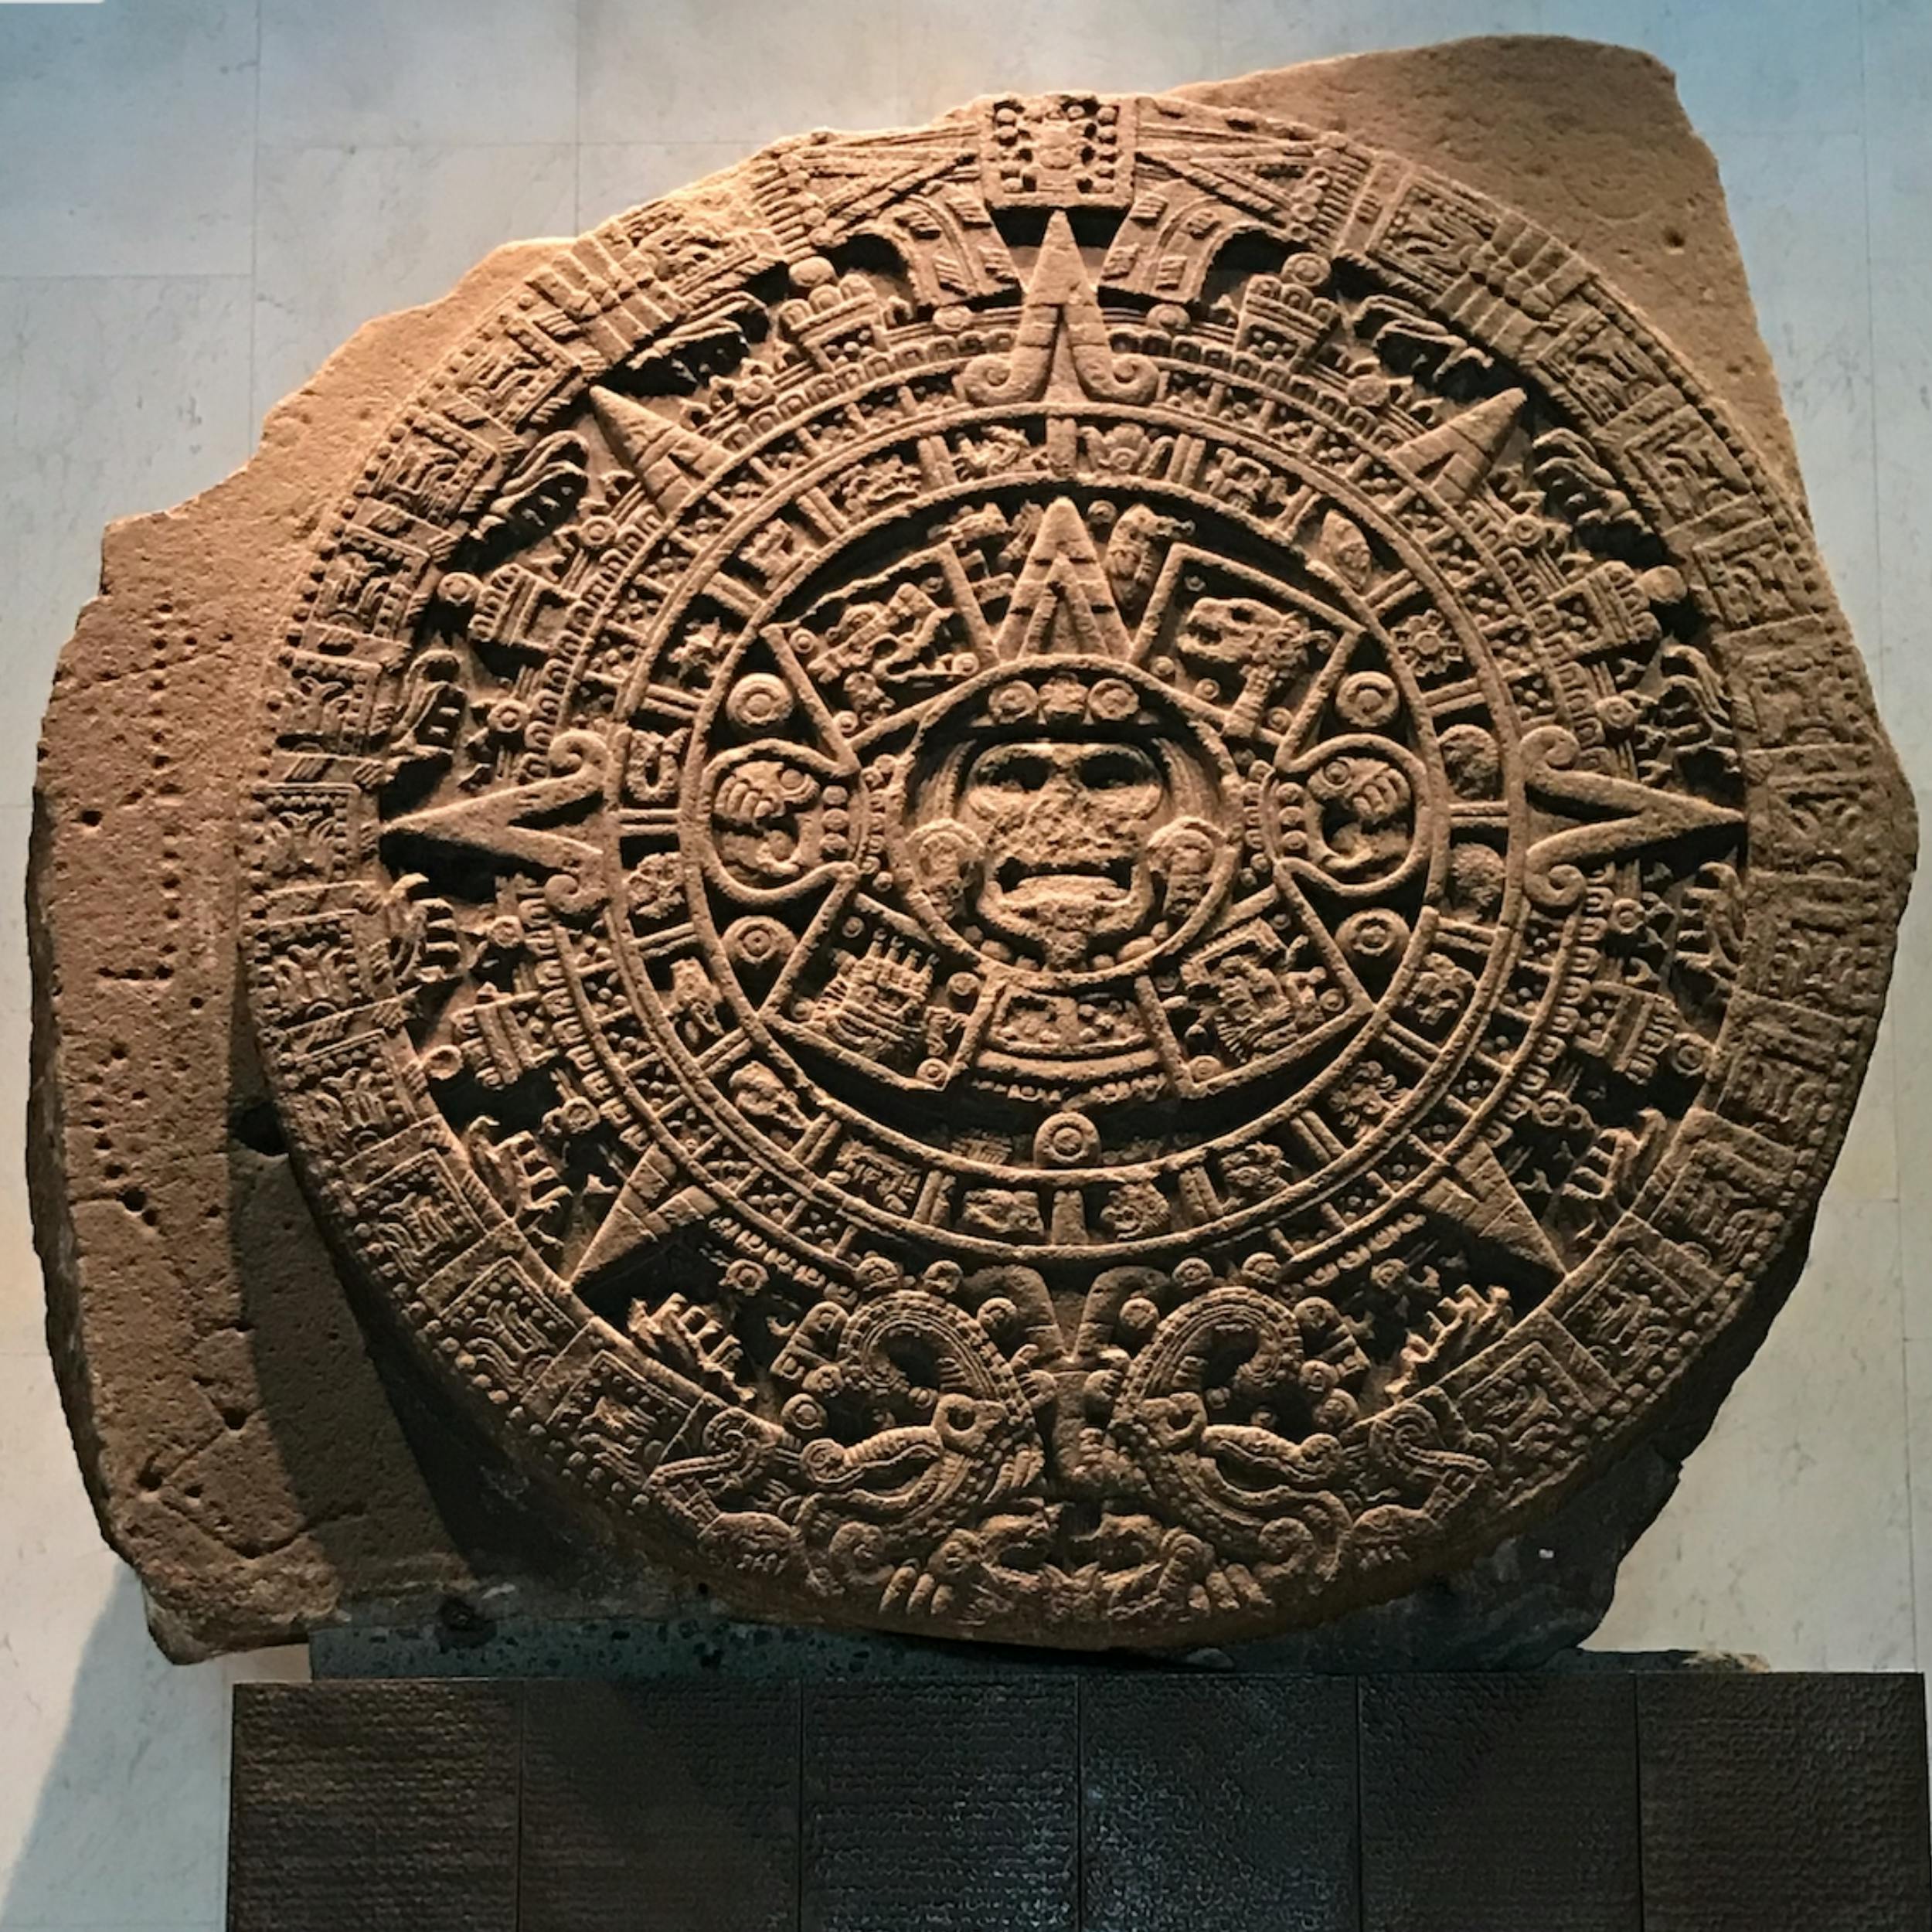 The Aztec Sun Stone or The Calendar Stone